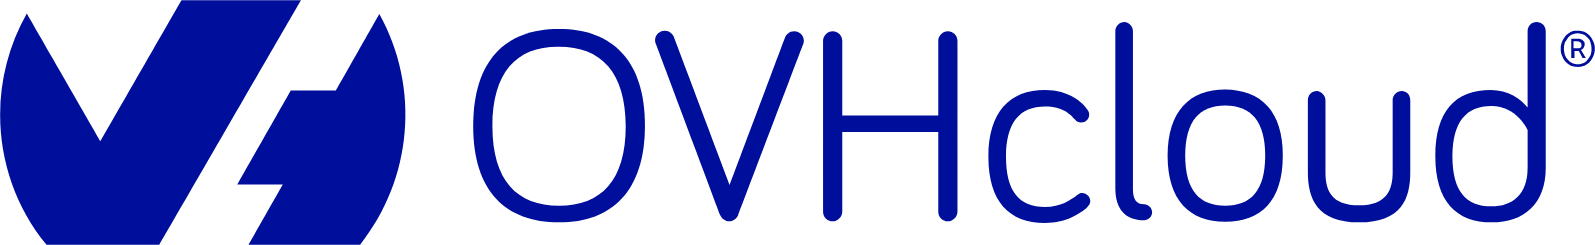 OVH Groupe logo large (transparent PNG)